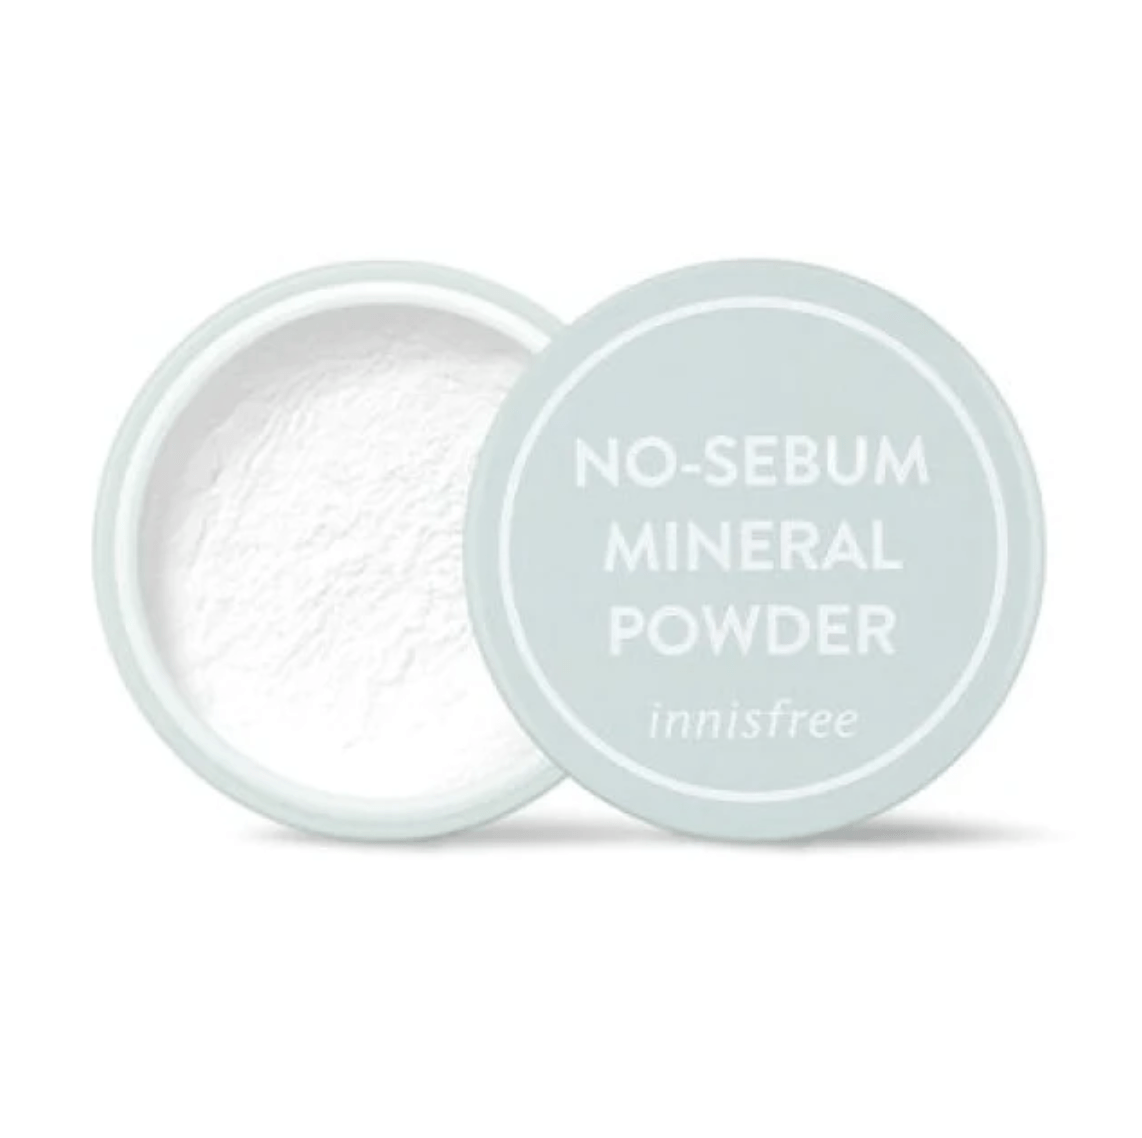 No sebum Mineral powder